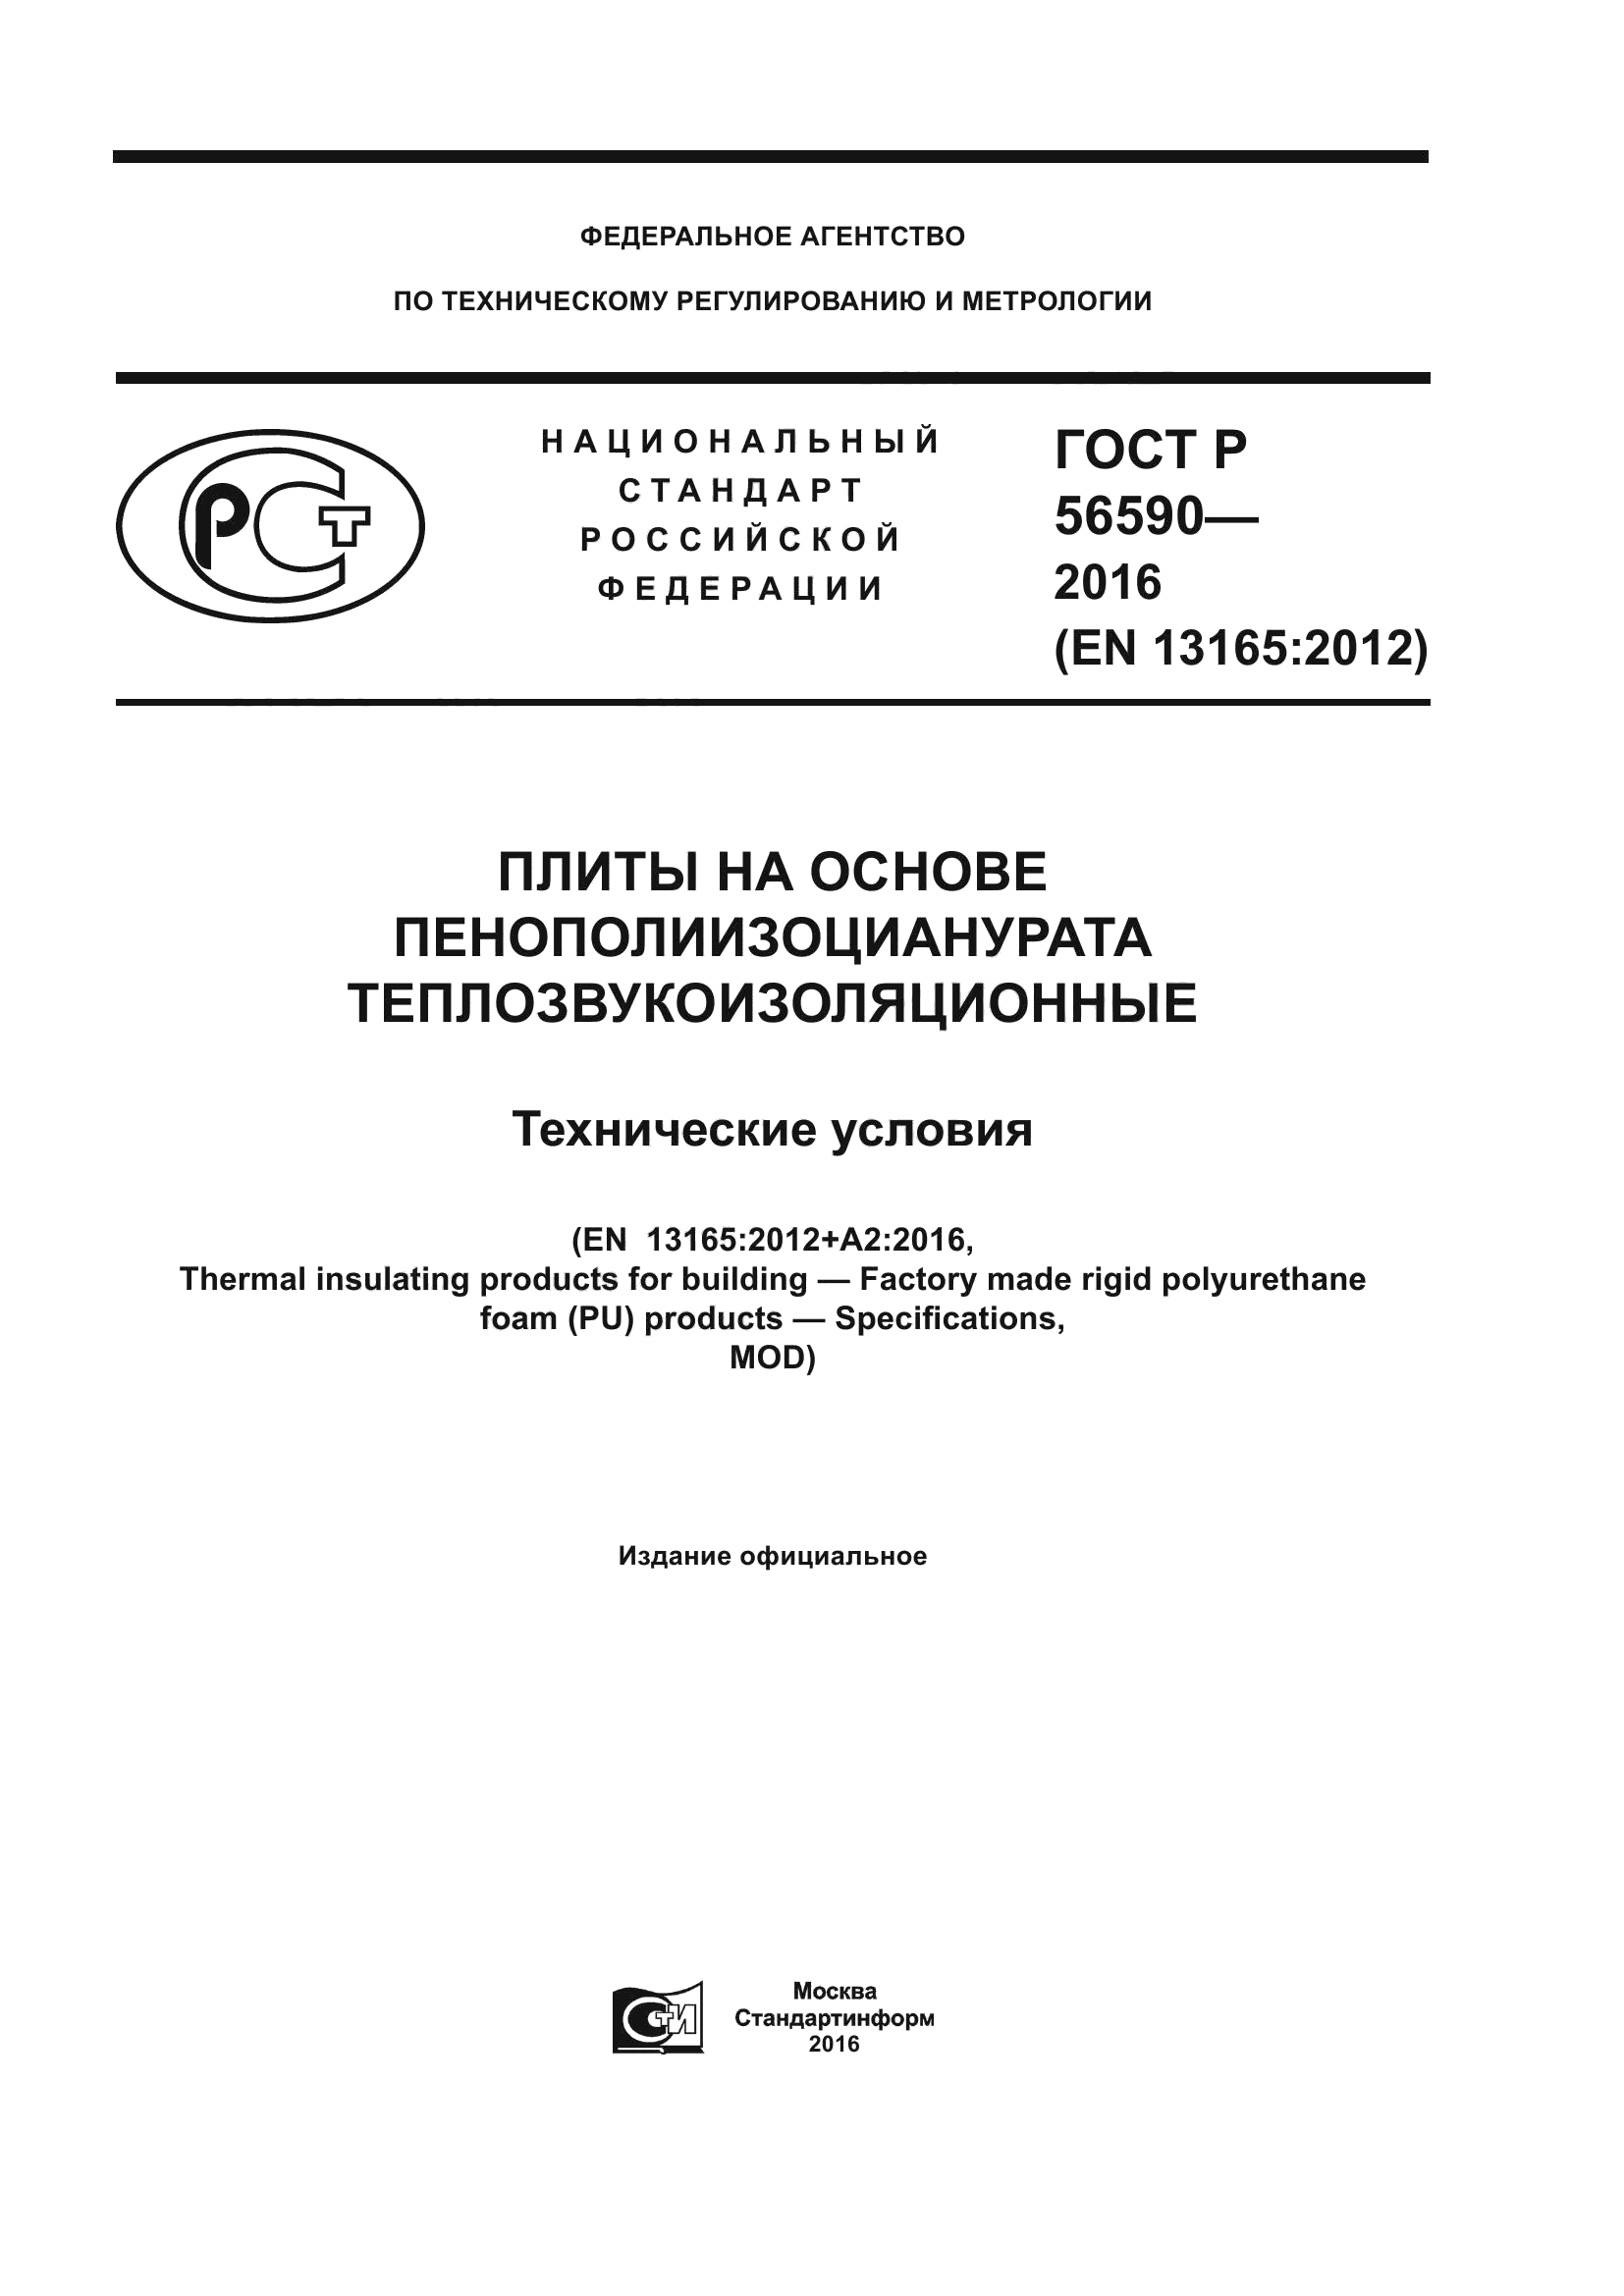 ГОСТ Р 56590-2016